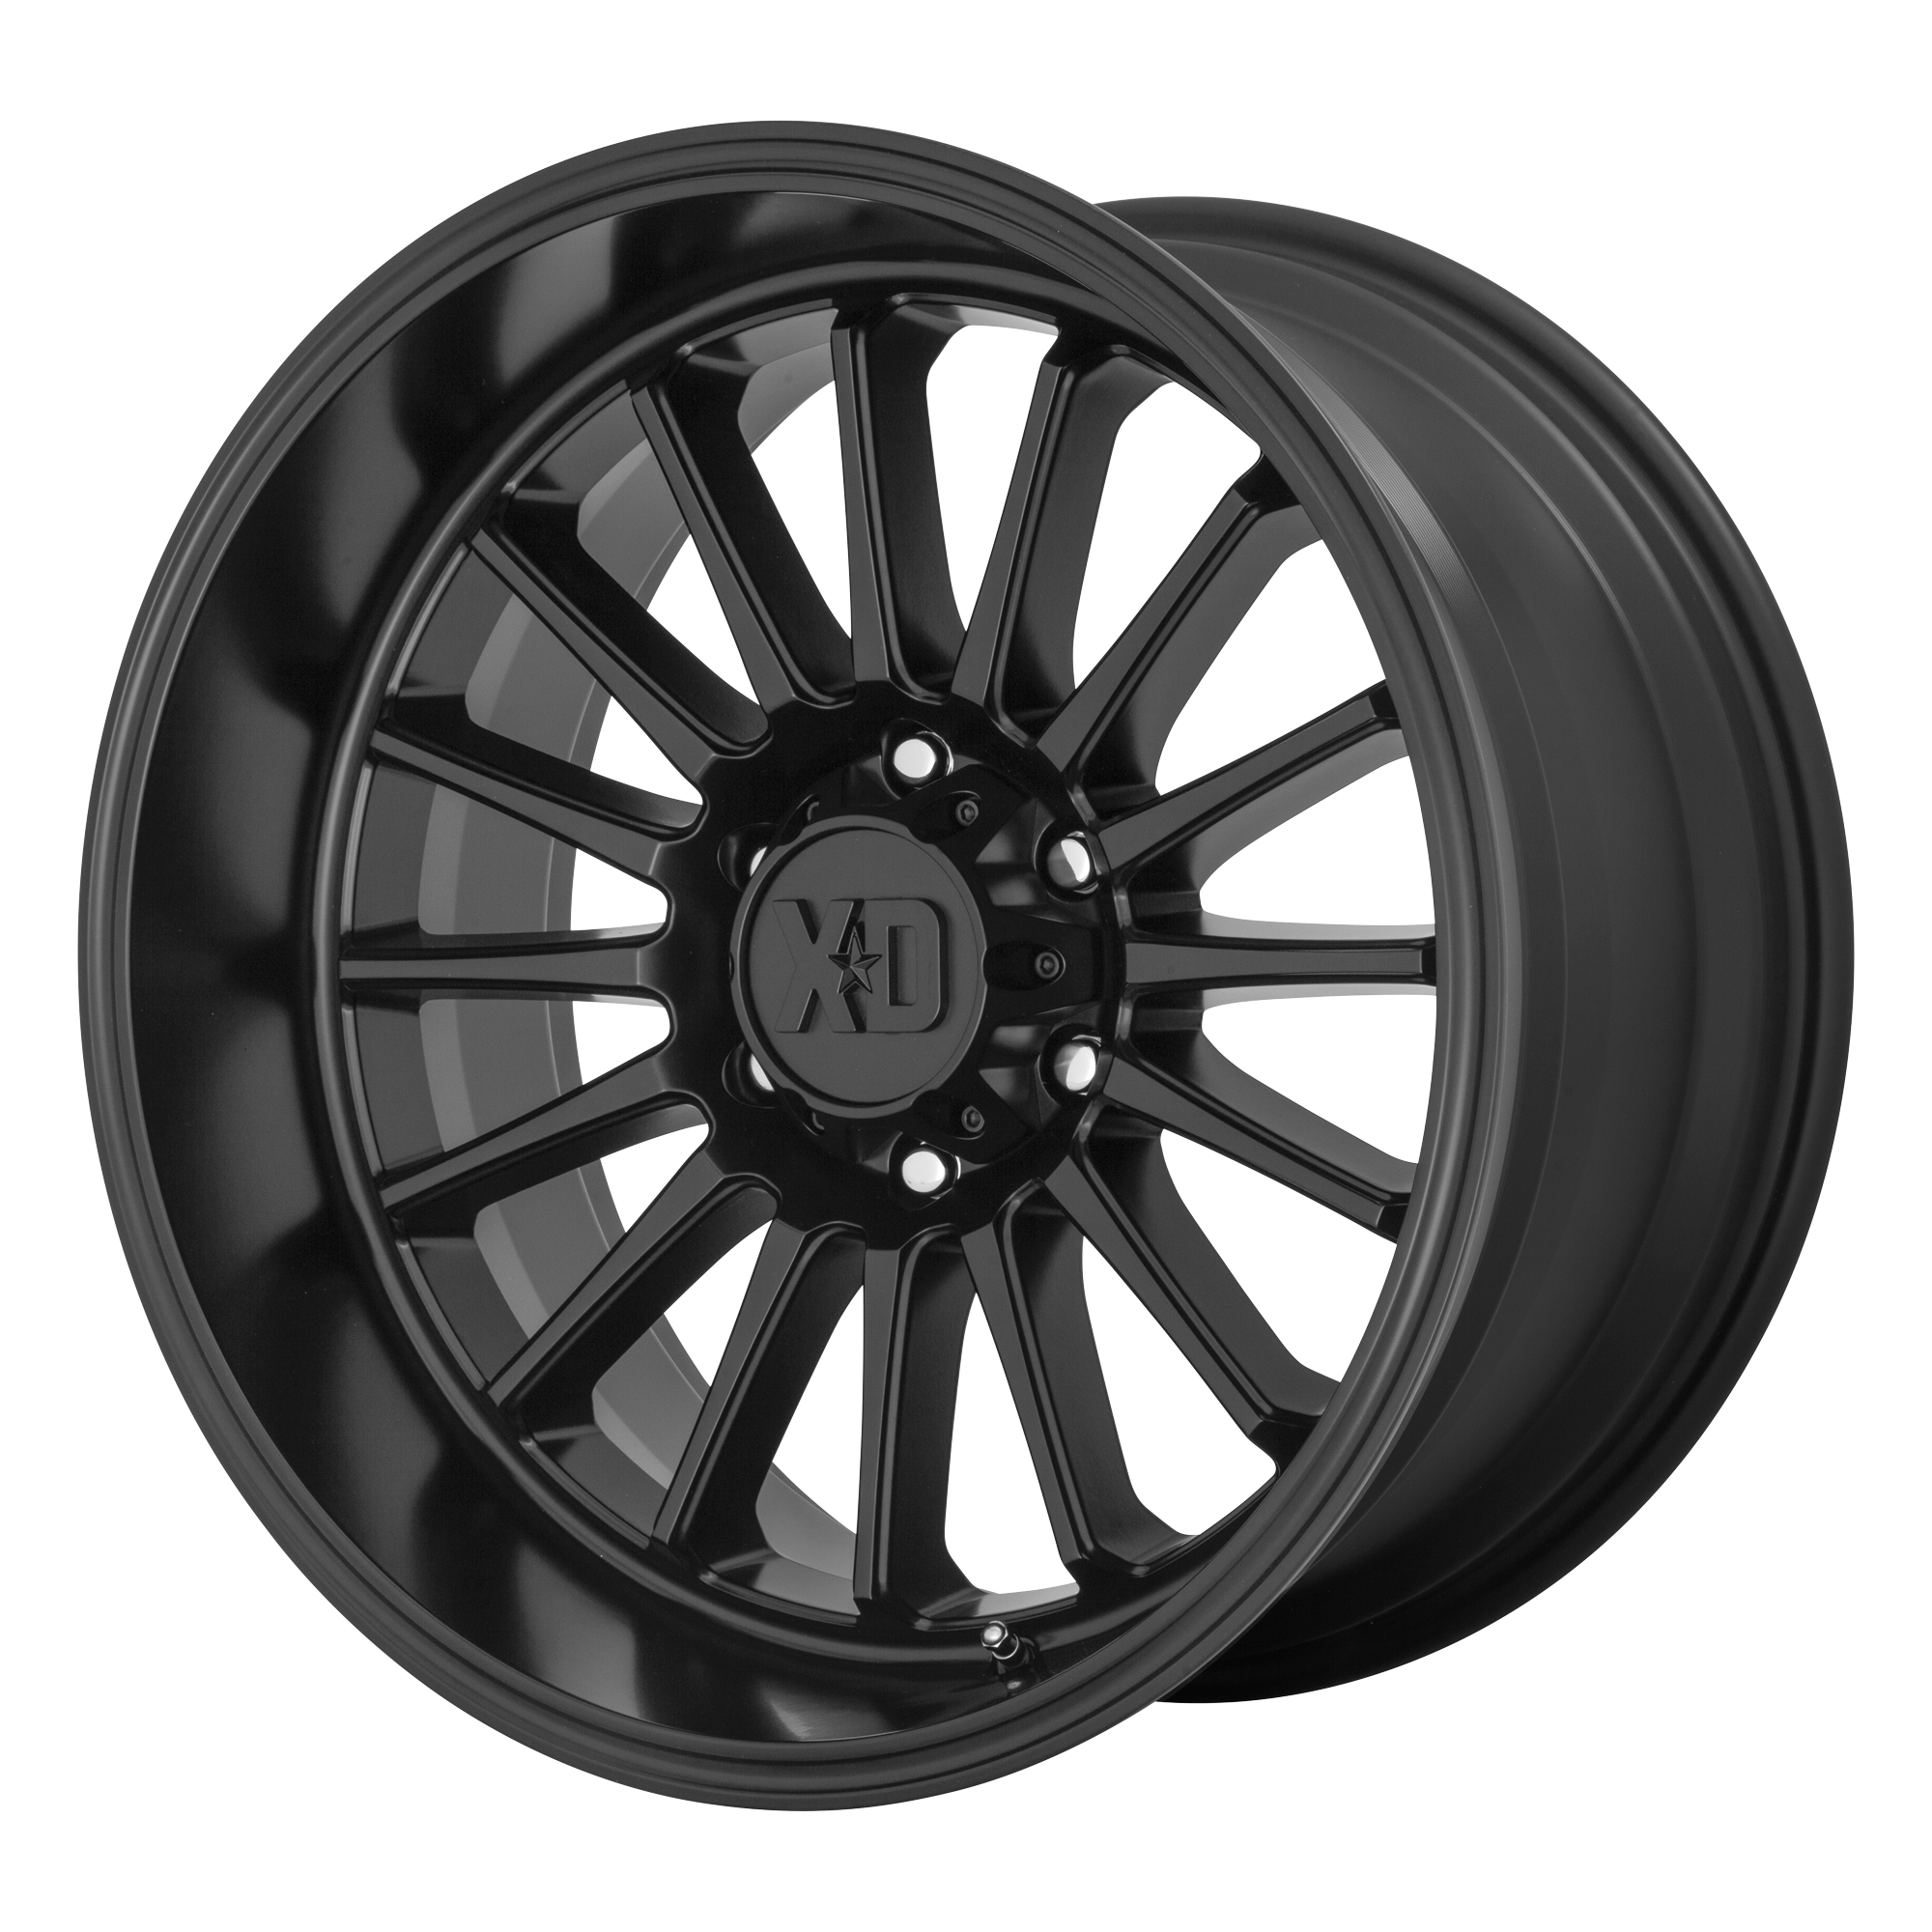 XD 22"x10" Non-Chrome Satin Black Custom Wheel ARSWCWXD85722085718N